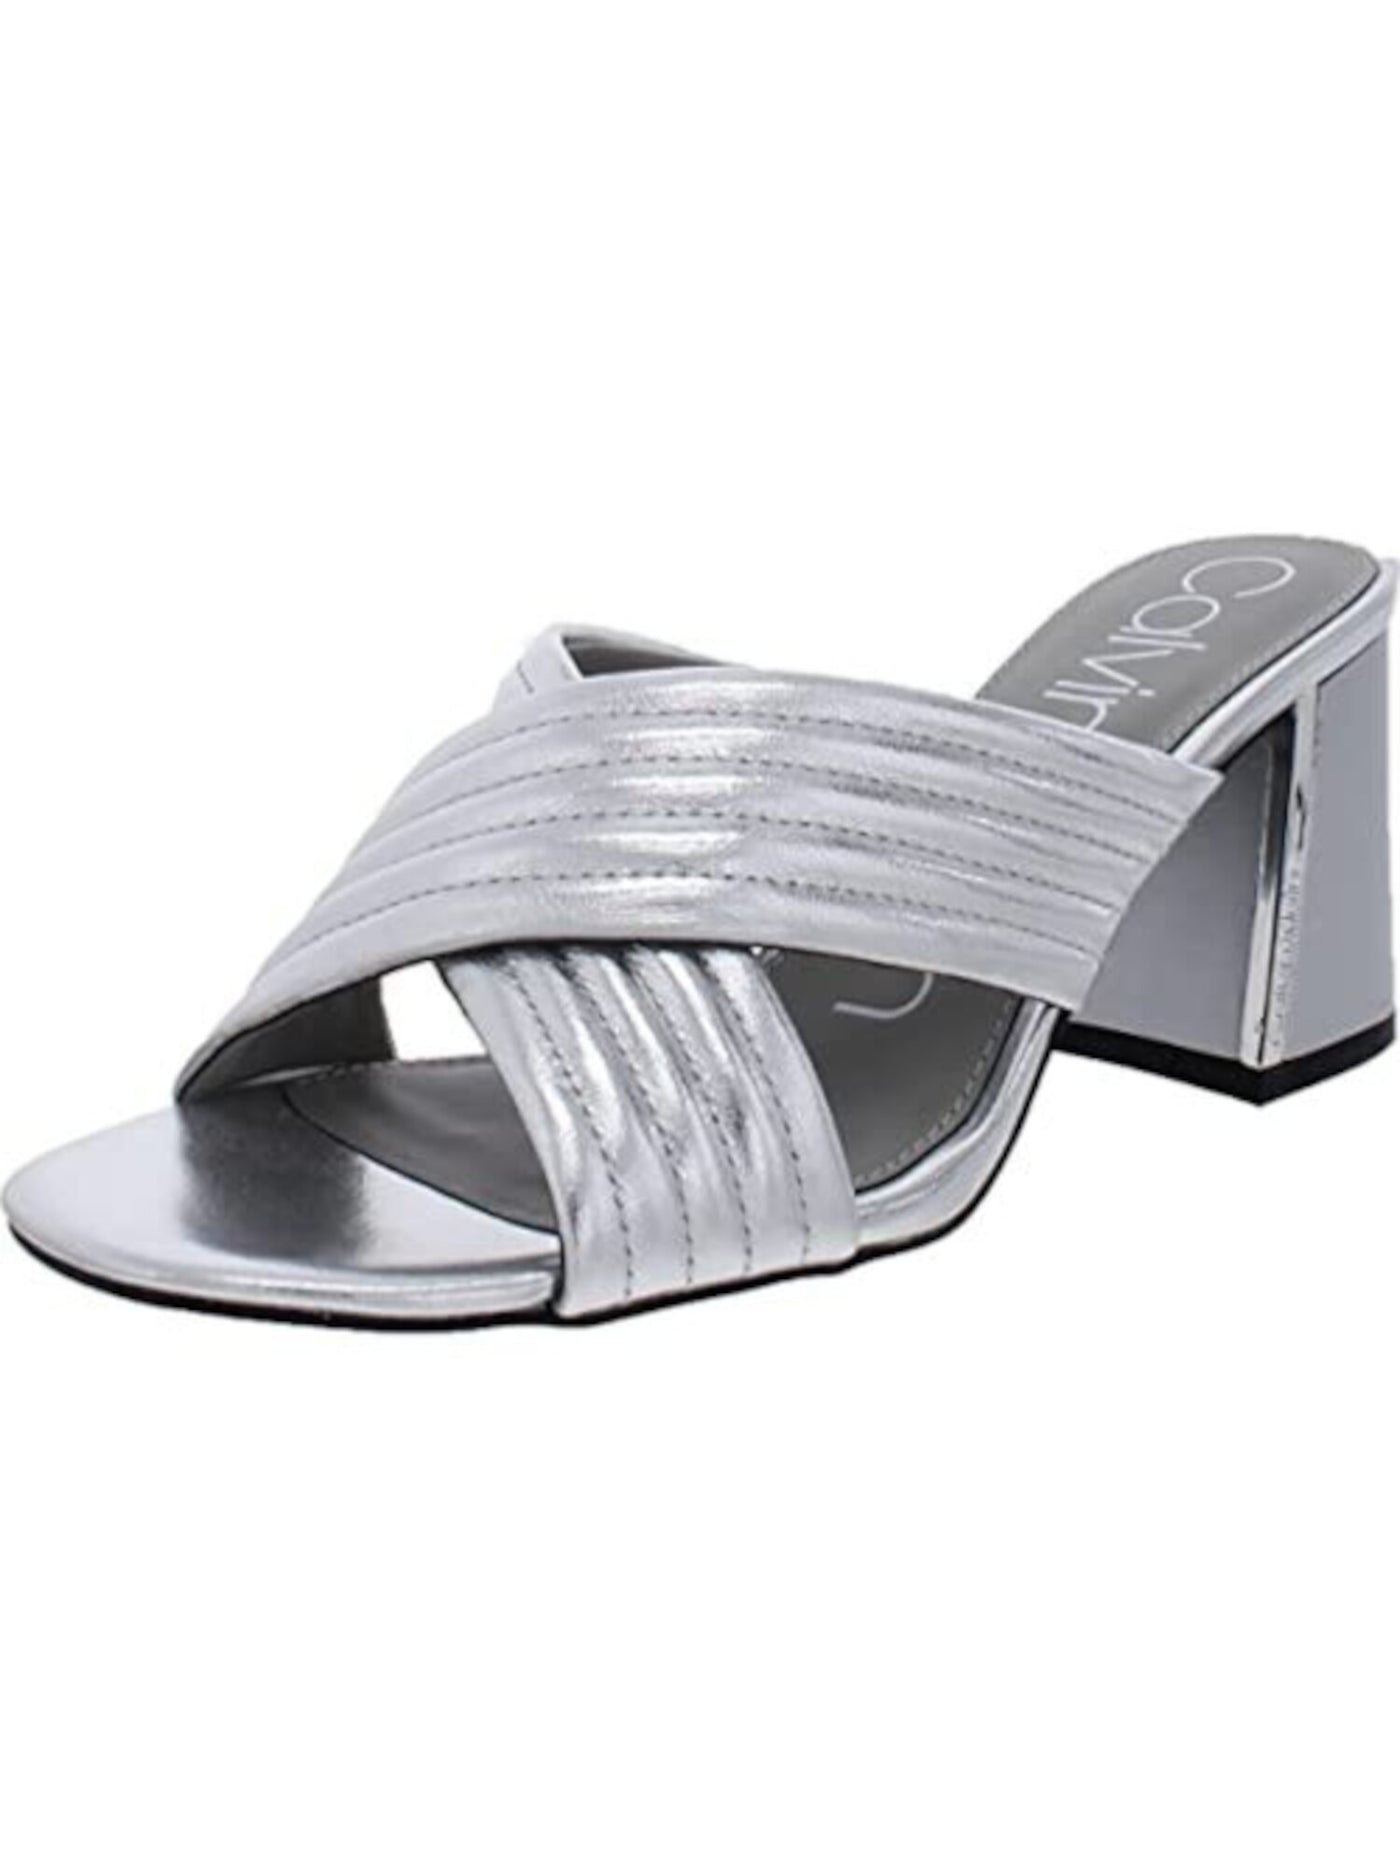 CALVIN KLEIN Womens Silver Logo Metallic Roena Round Toe Flare Slip On Leather Dress Heeled Mules Shoes 8 M